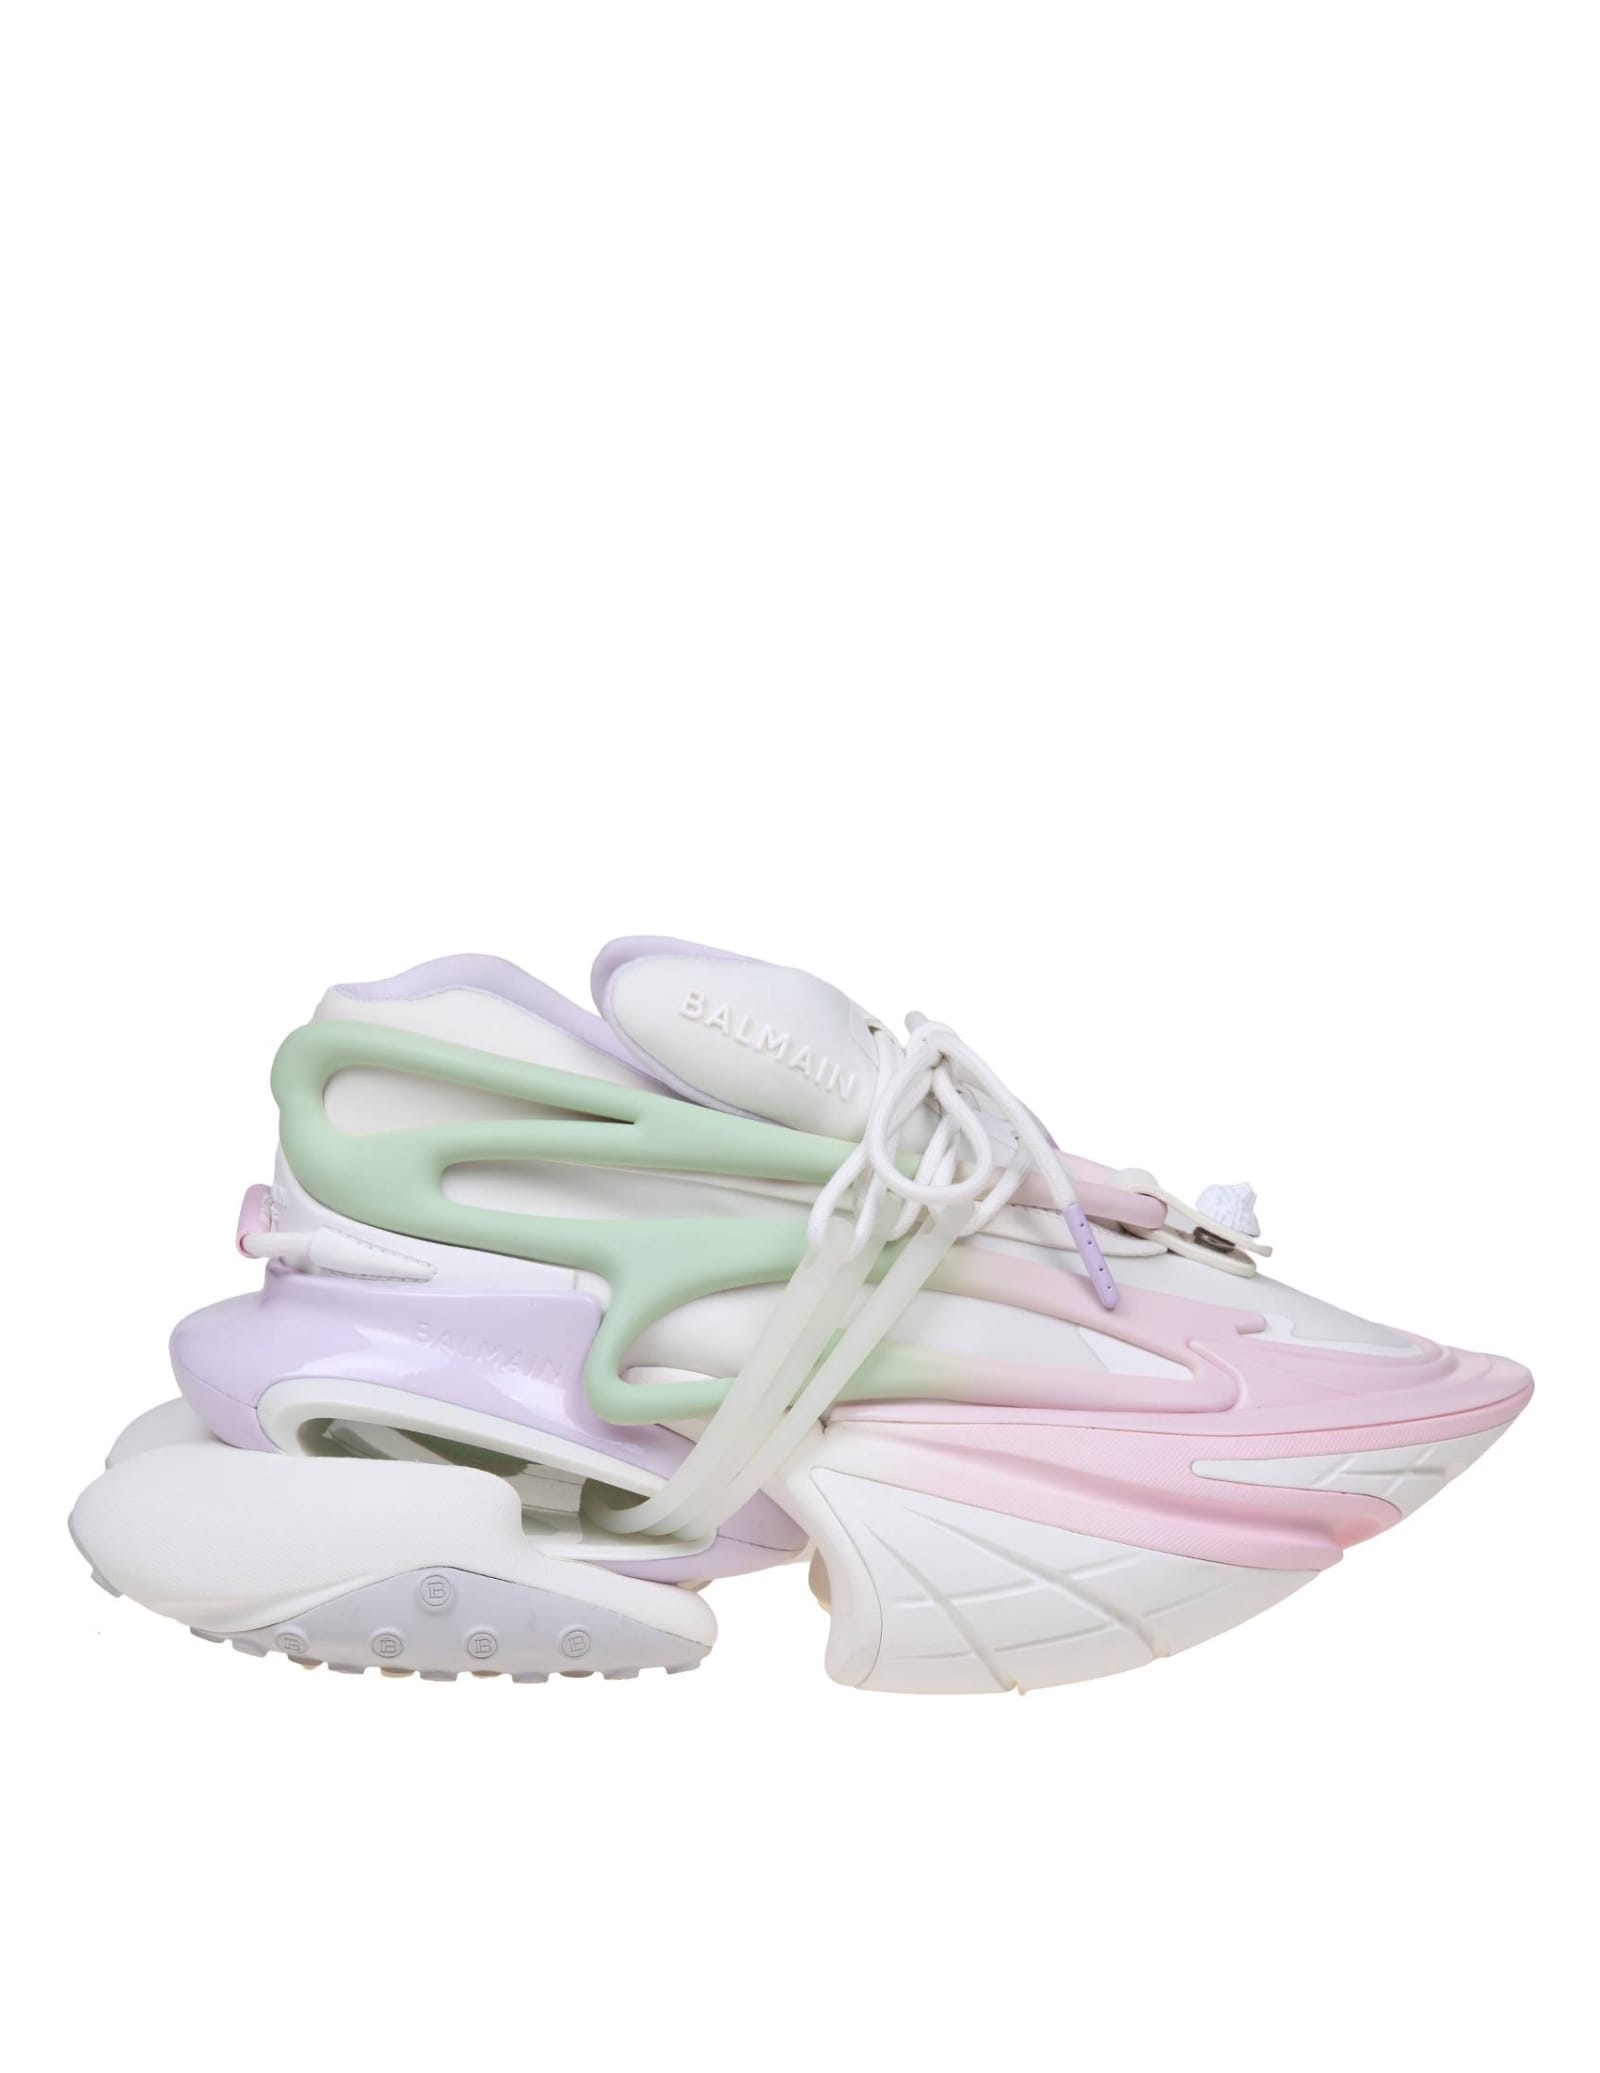 Shop Balmain Unicorn Sneakers In Multicolored Neoprene And Leather In White